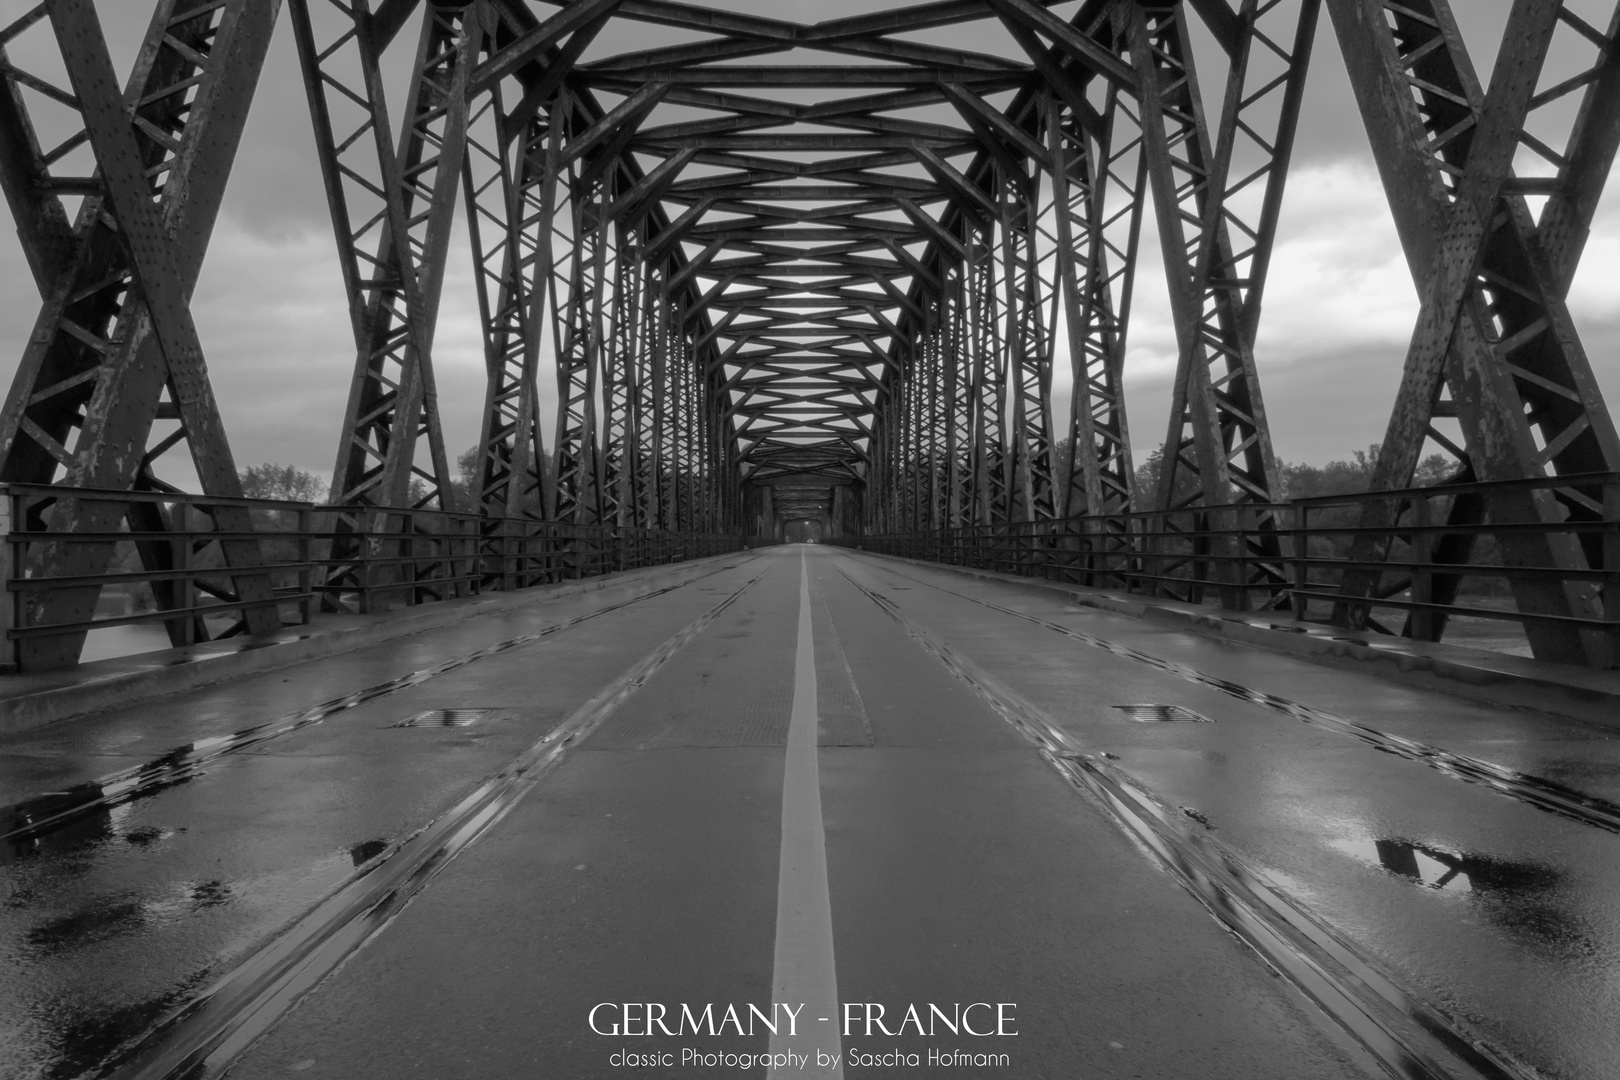 Germany-France